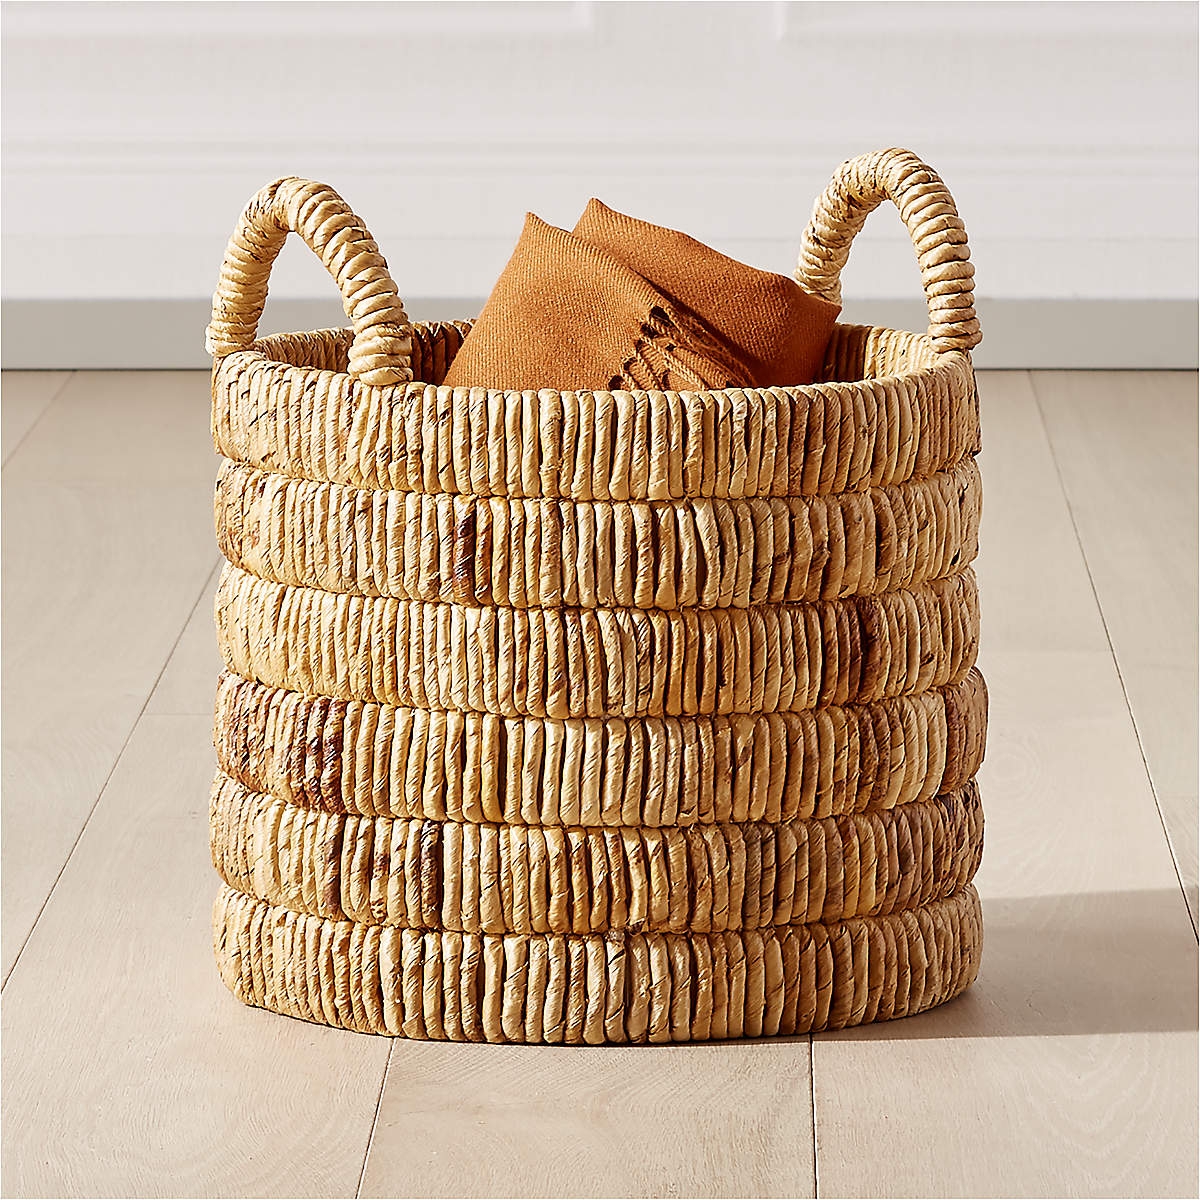 Milos Handwoven Storage Basket Medium - Image 2